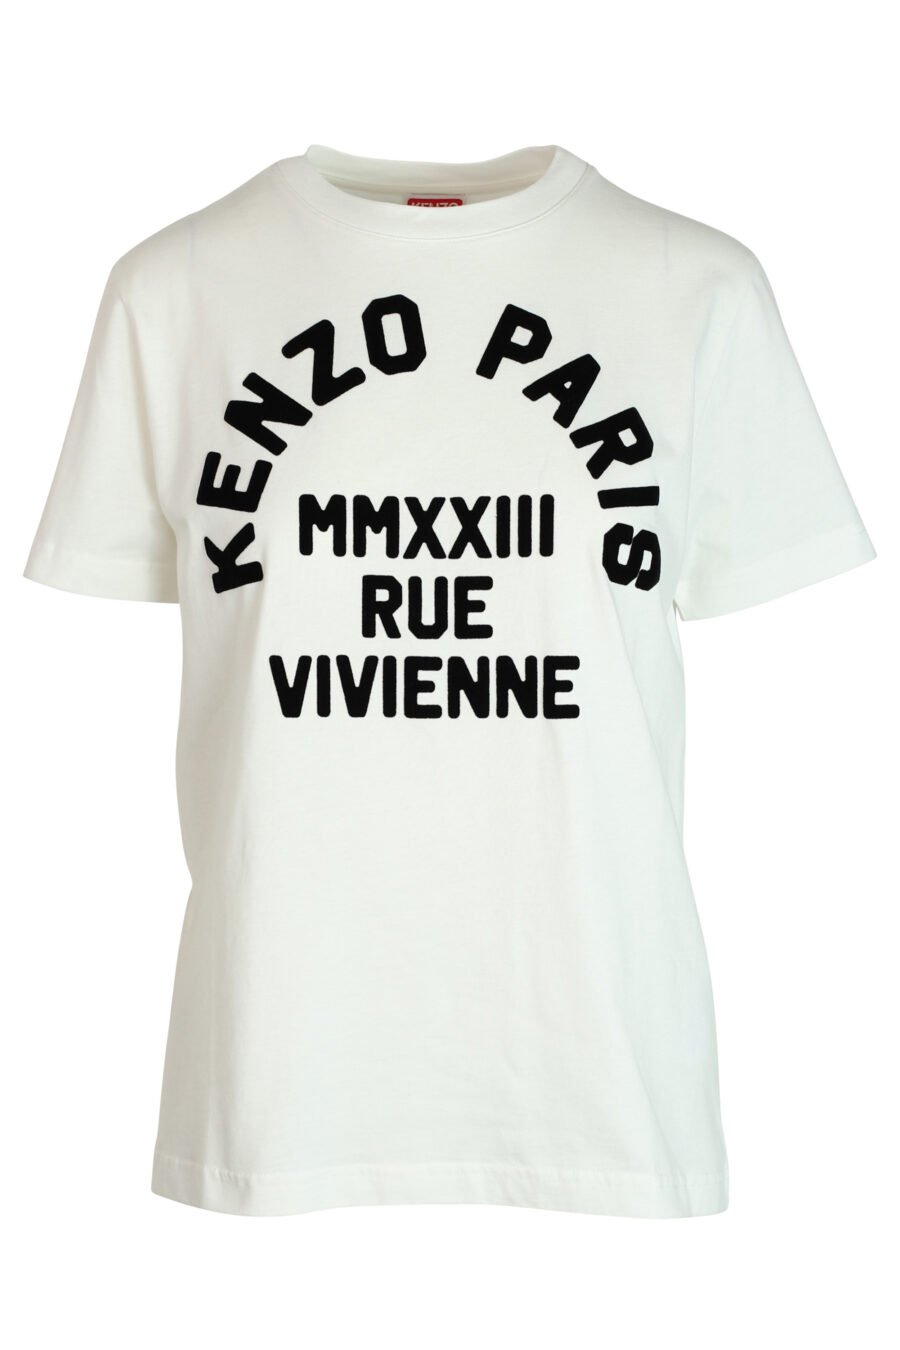 T-shirt blanc avec maxilogo noir "rue vivenne" - 3612230461161